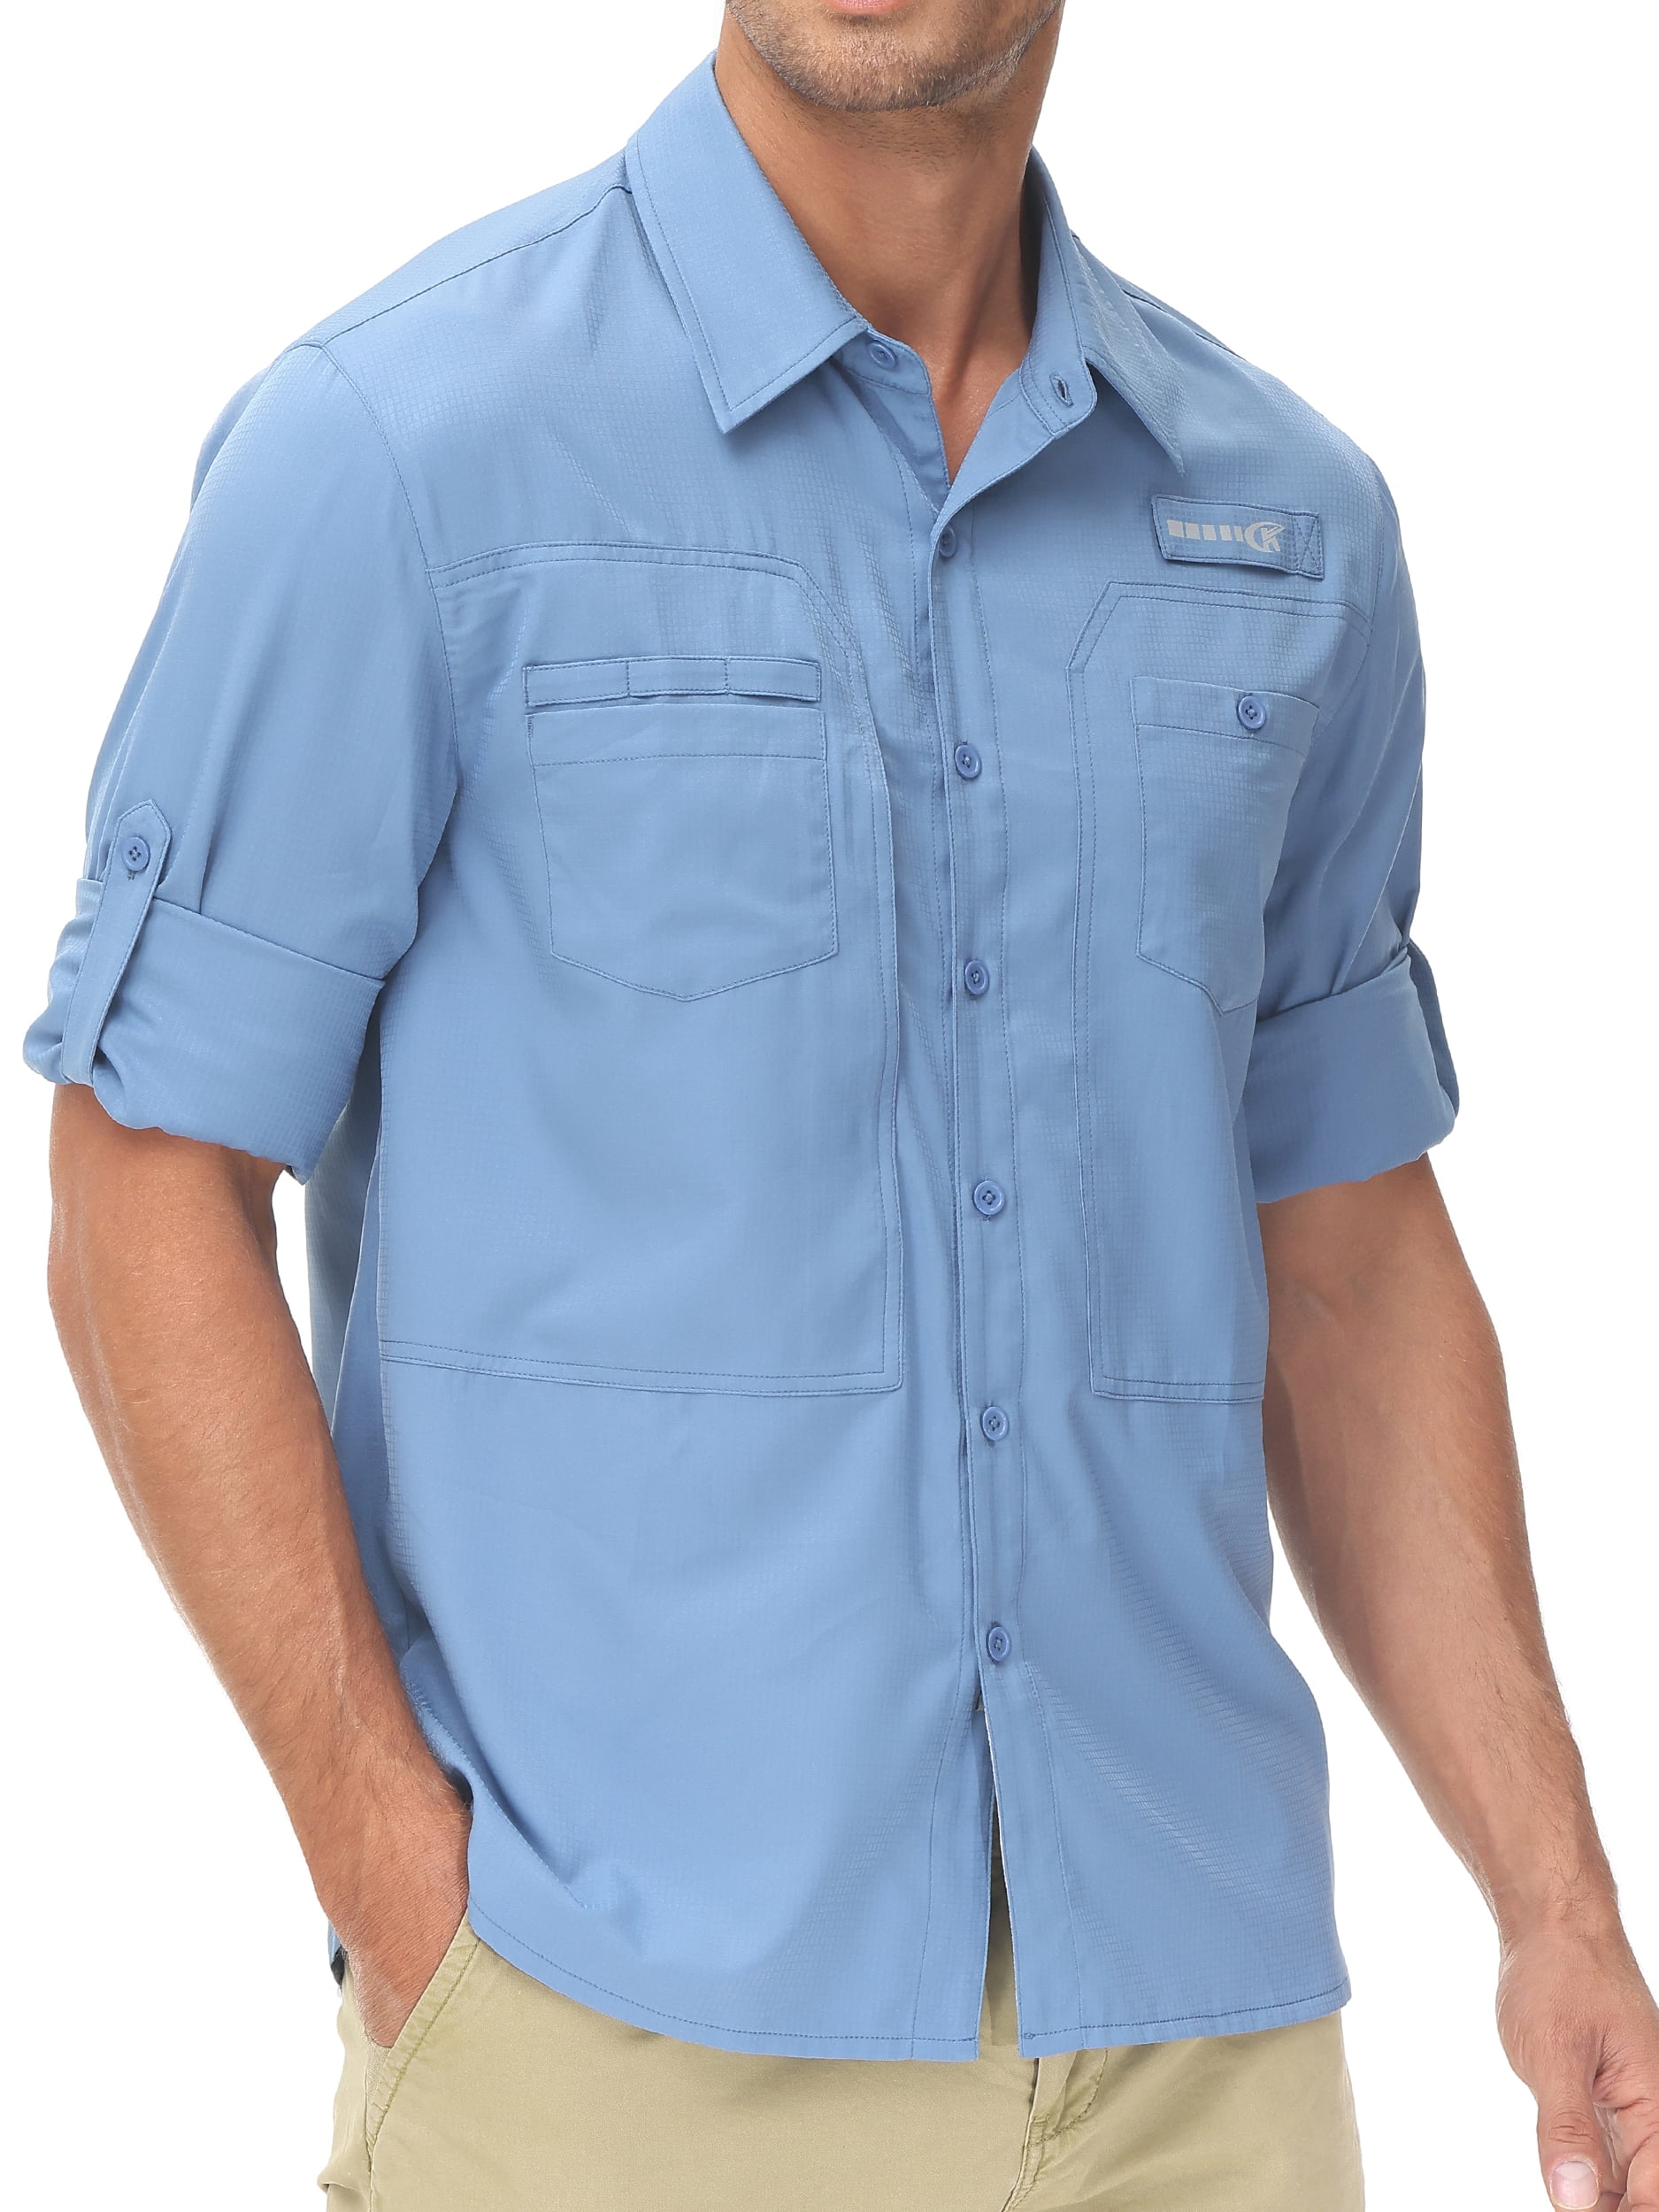 Pdbokew Men's Sun Protection Fishing Shirts Long Sleeve Travel Work Shirts  for Men UPF50+ Button Down Shirts with Zipper Pockets Mist Blue XL 